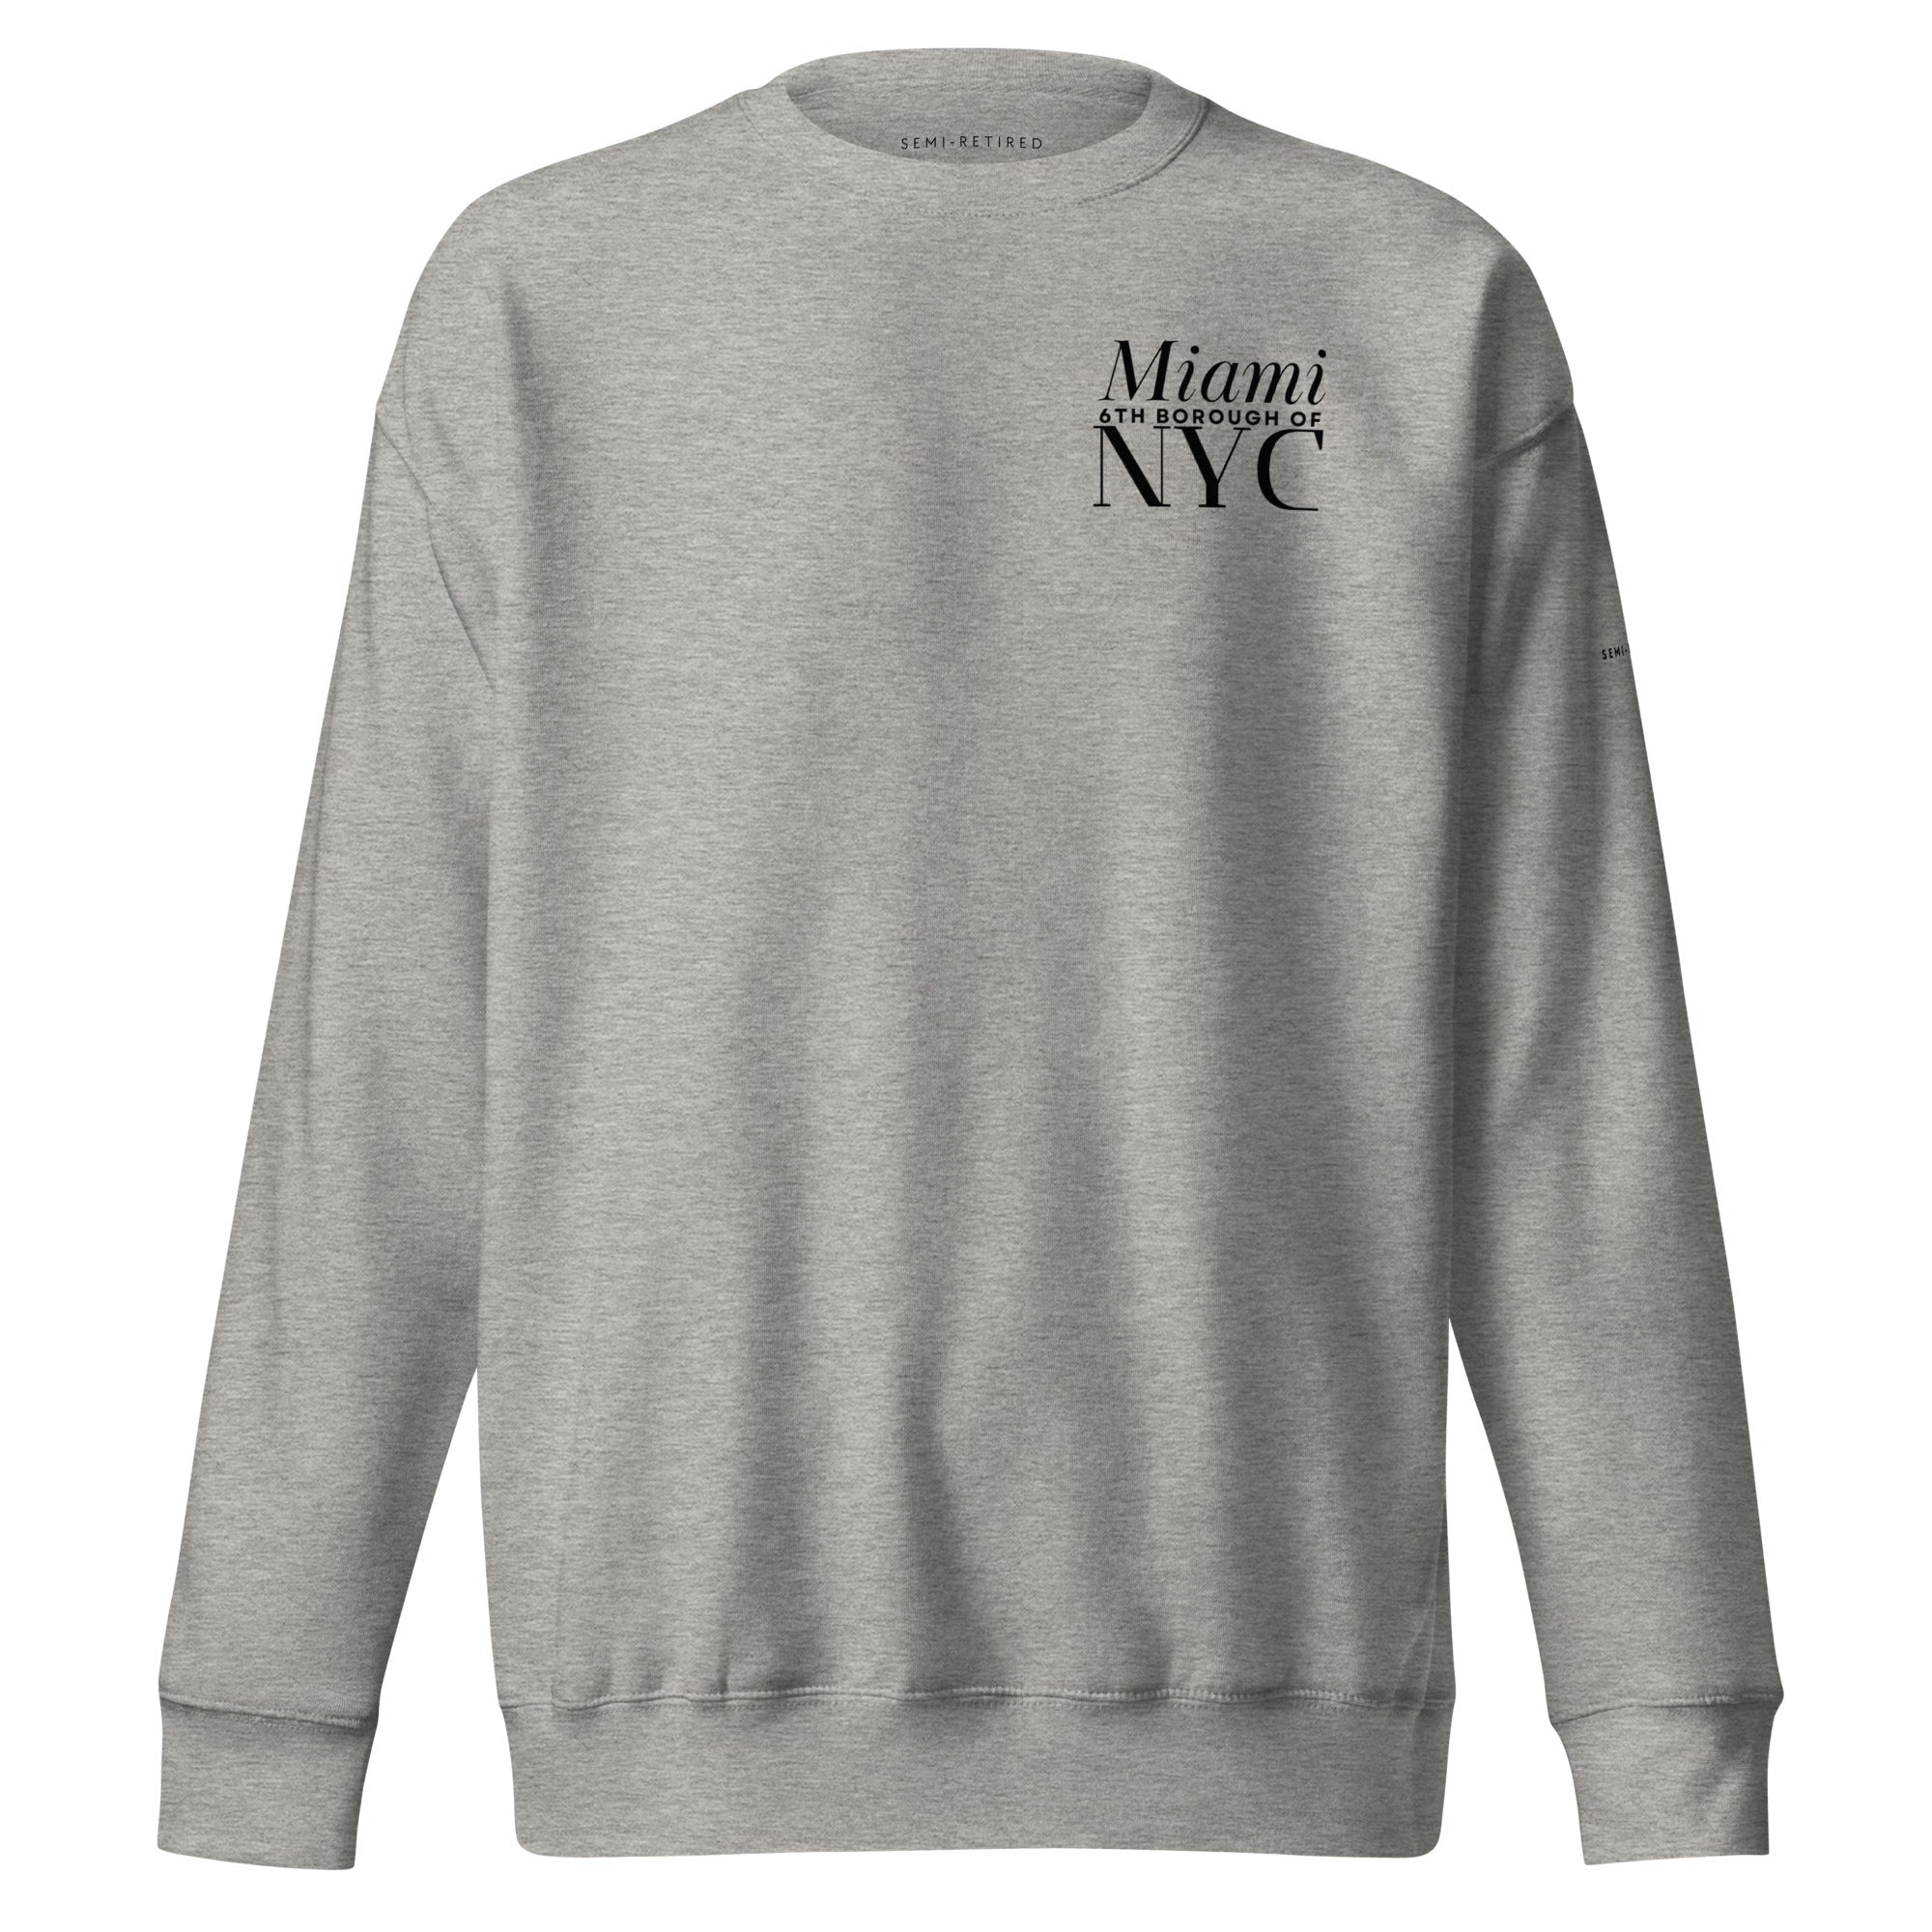 6th Borough Miami Premium Sweatshirt - Gray